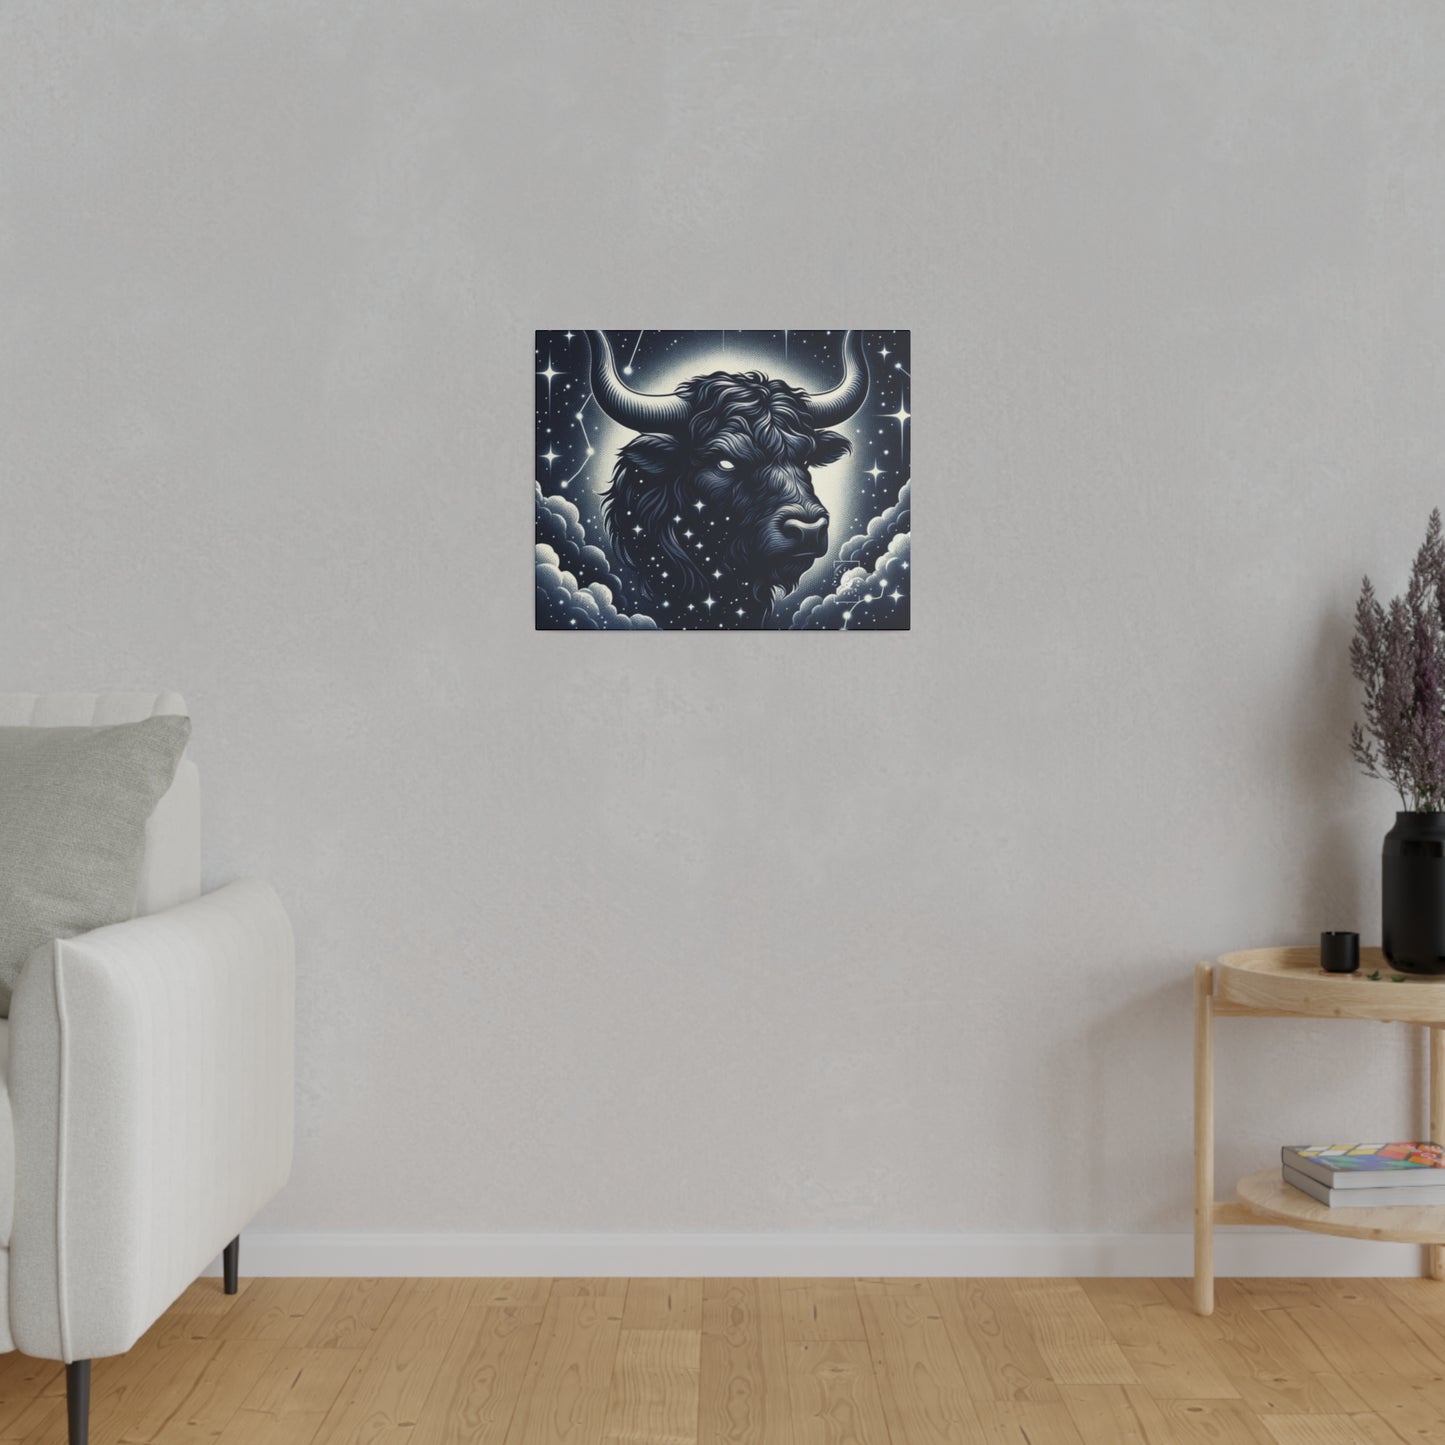 Celestial Taurine Constellation - Art Print Canvas